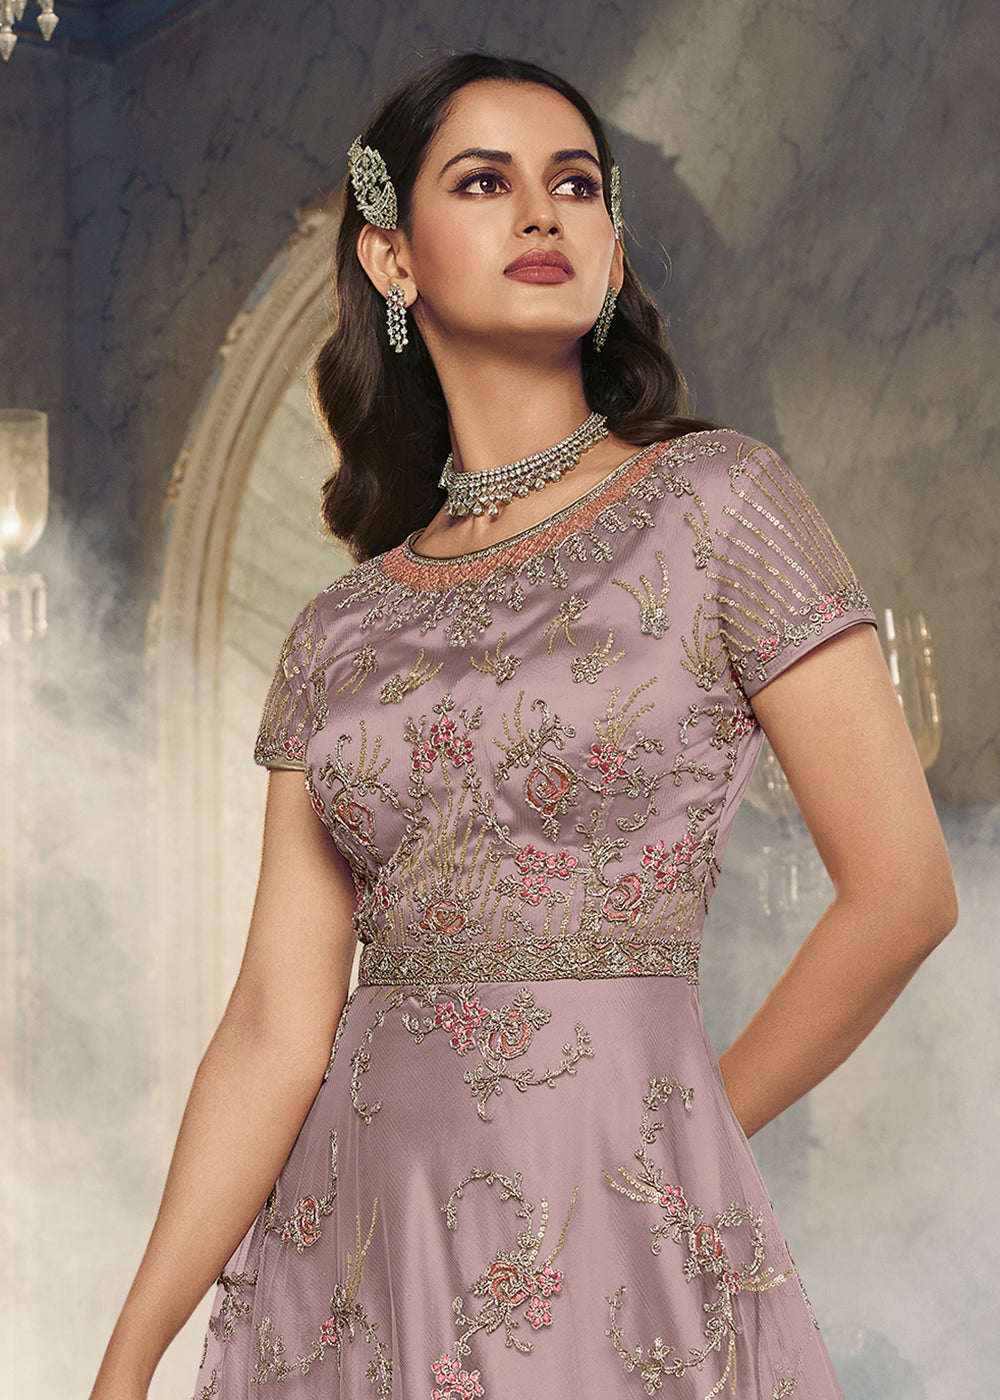 Buy Now Light Mauve Wedding Party Net Designer Anarkali Suit Online in USA, UK, Australia, New Zealand, Canada & Worldwide at Empress Clothing.